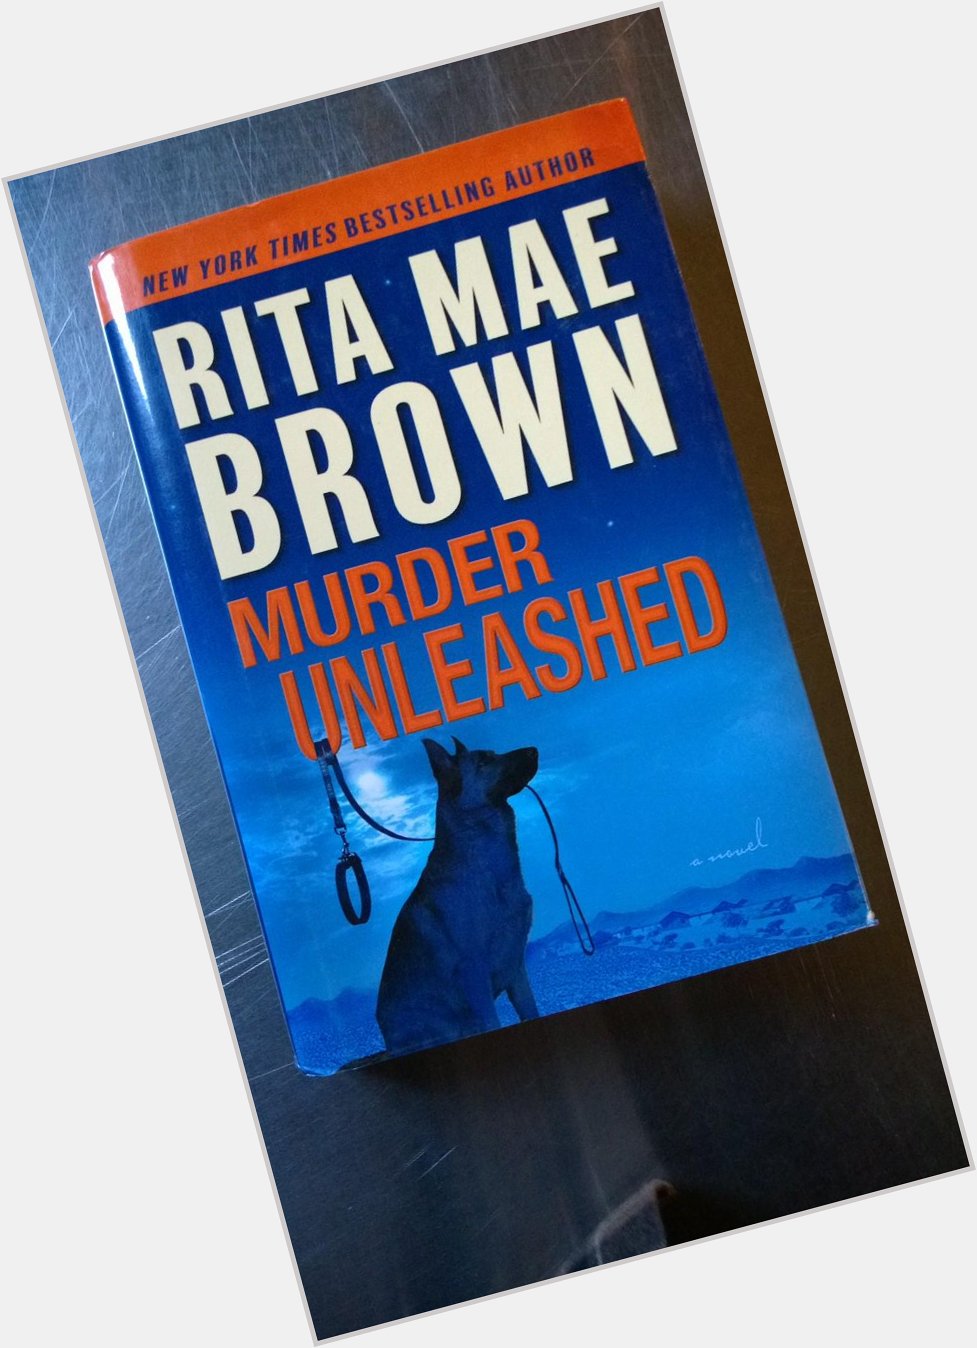 Happy 70th Birthday to Rita Mae Brown! 